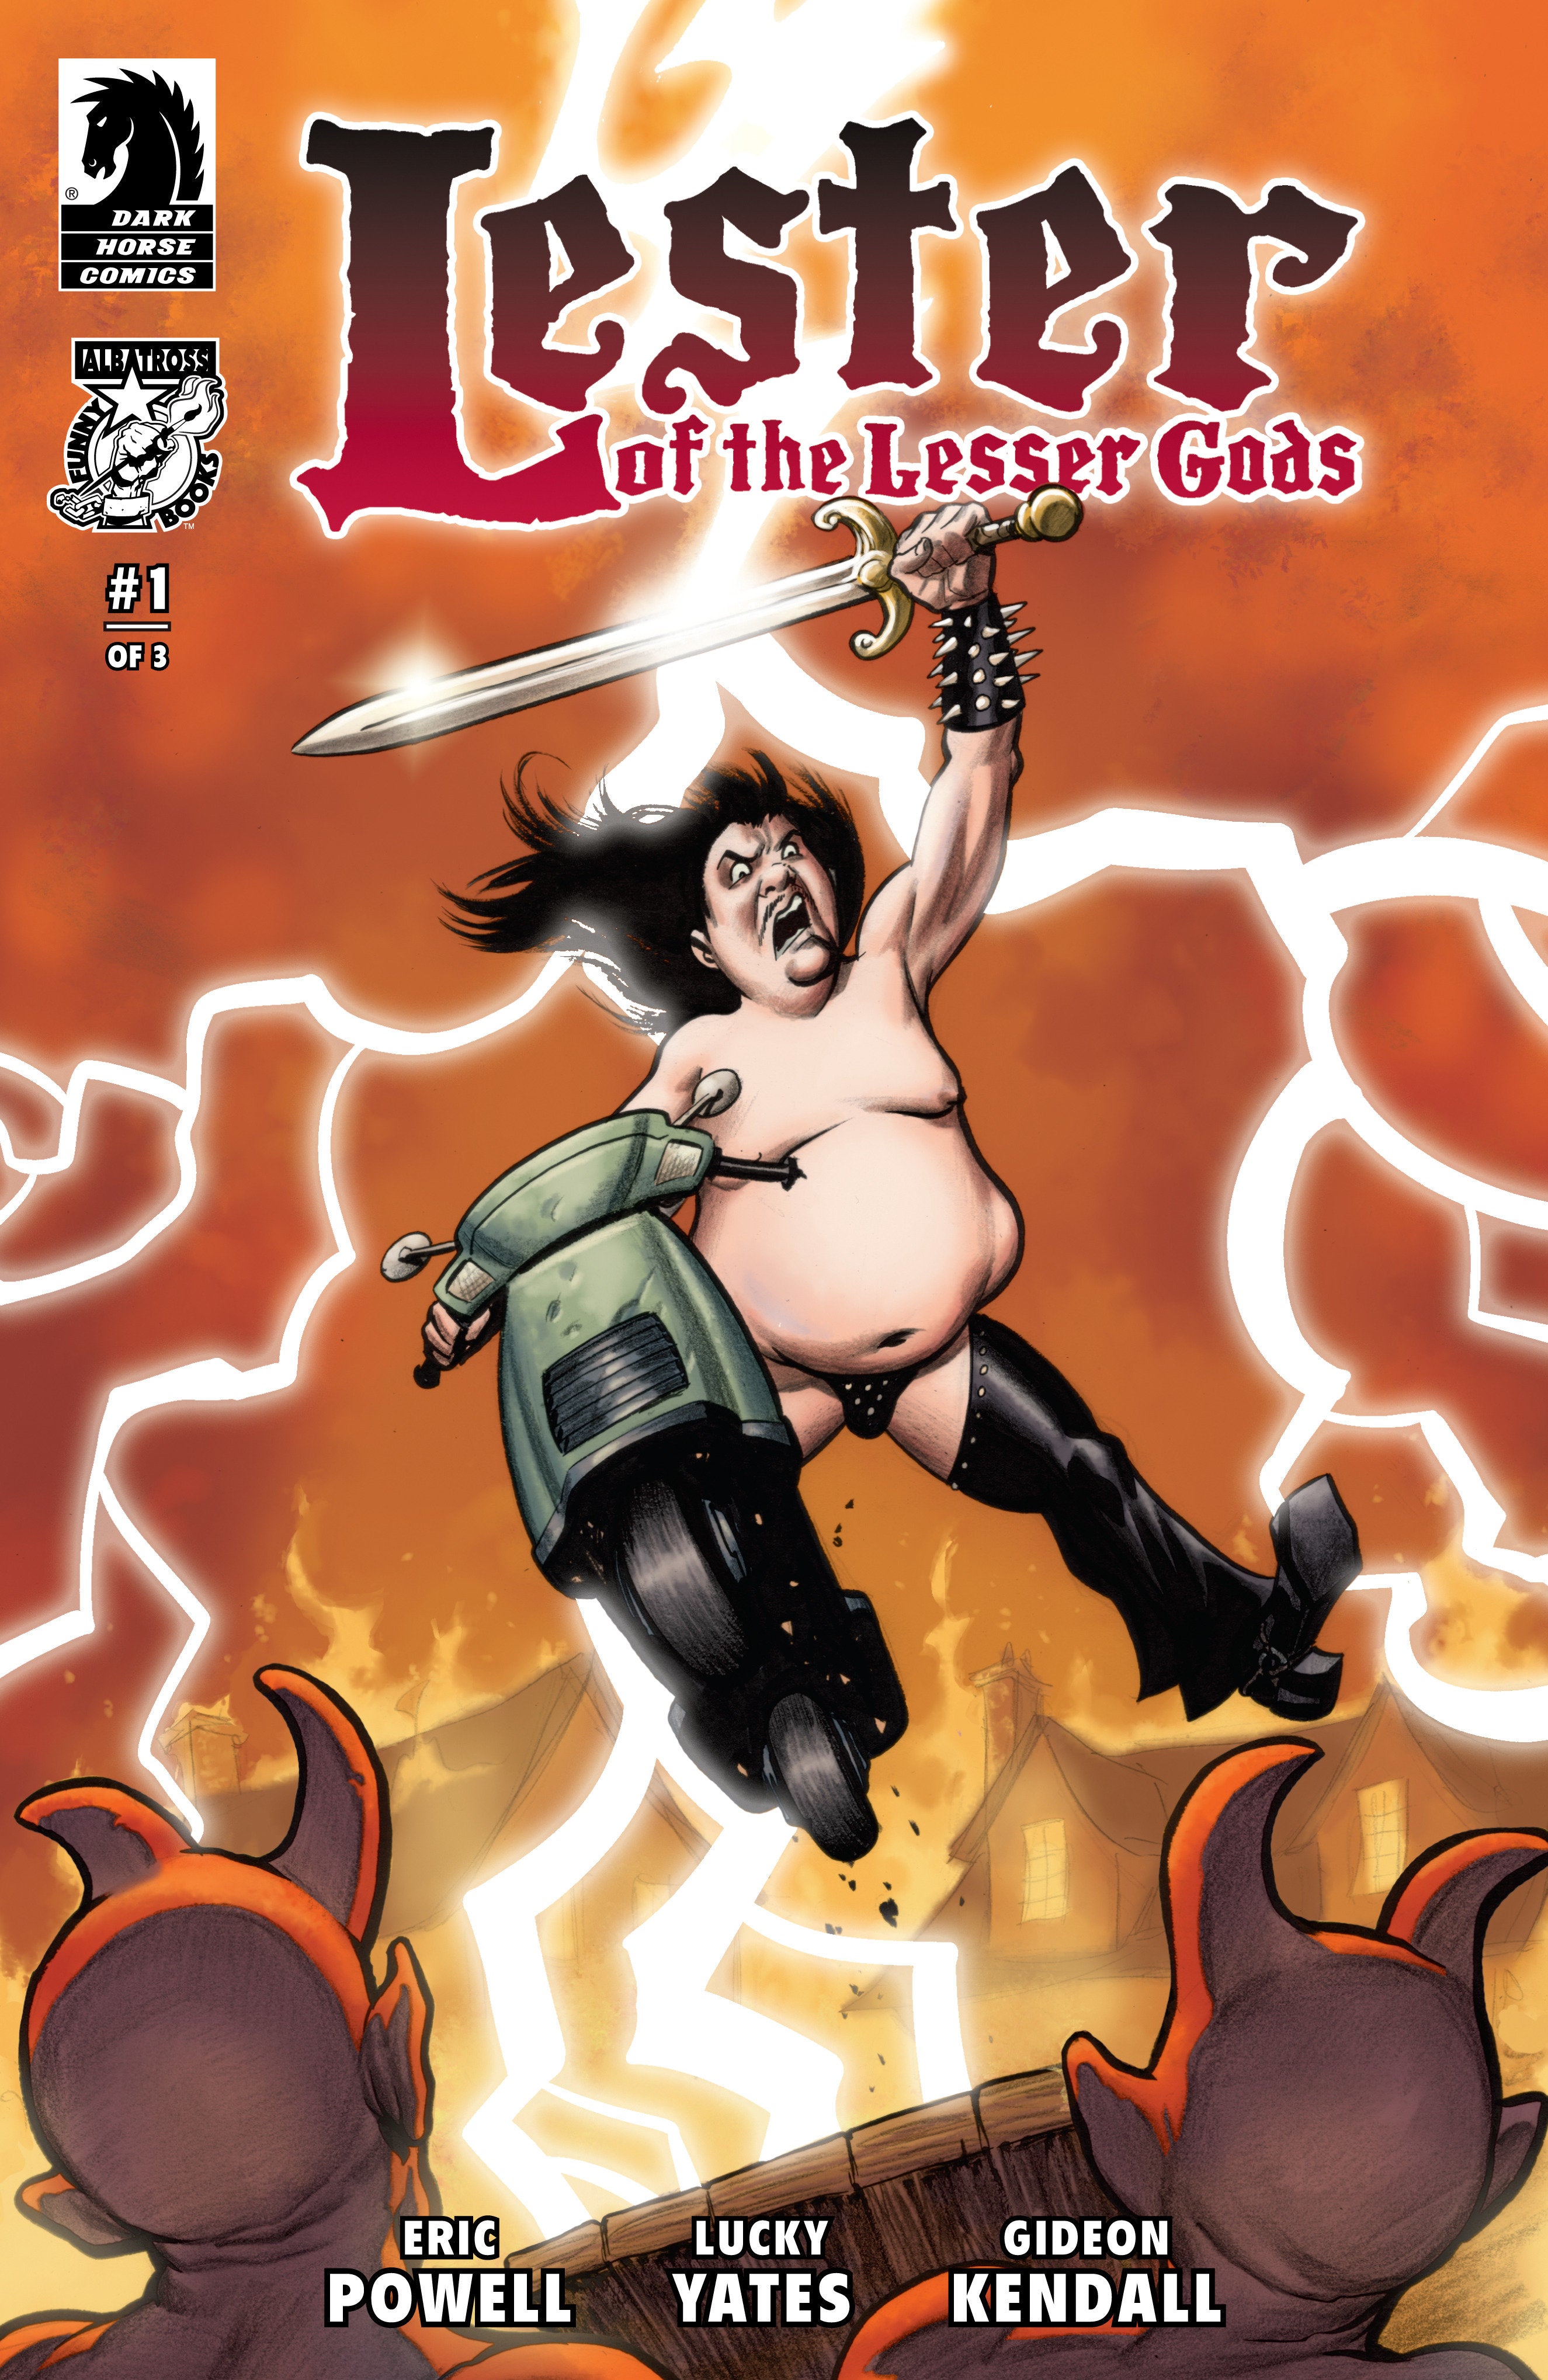 Lester Of The Lesser Gods #1 (Cover B) (Eric Powell)